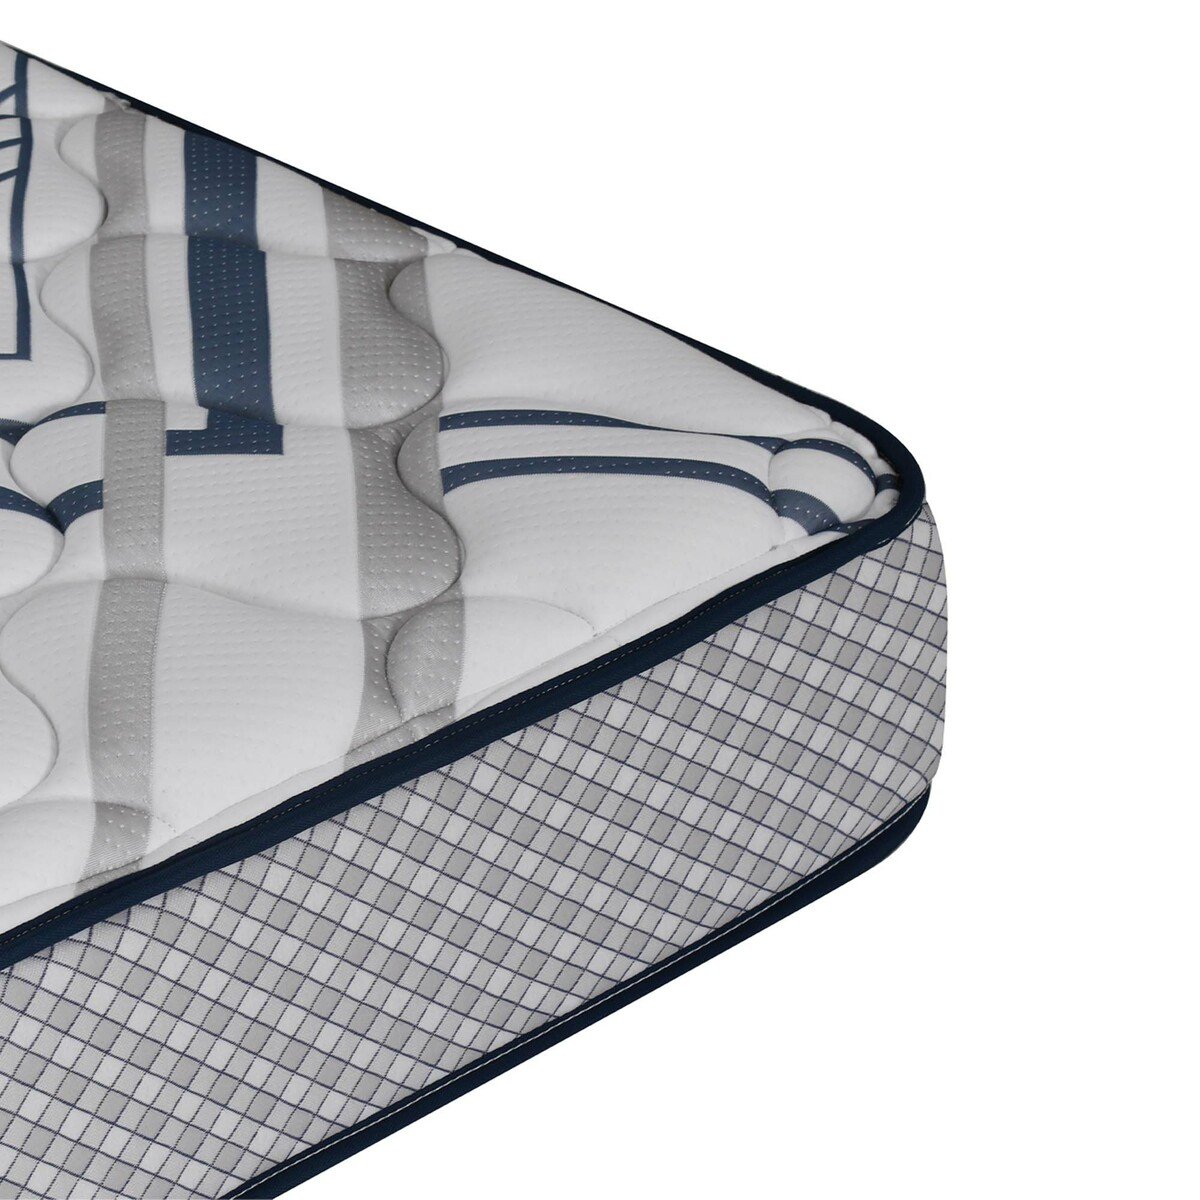 DesignPlus Queen's Choice Pocket Spring Mattress 190x150x26cm Firm